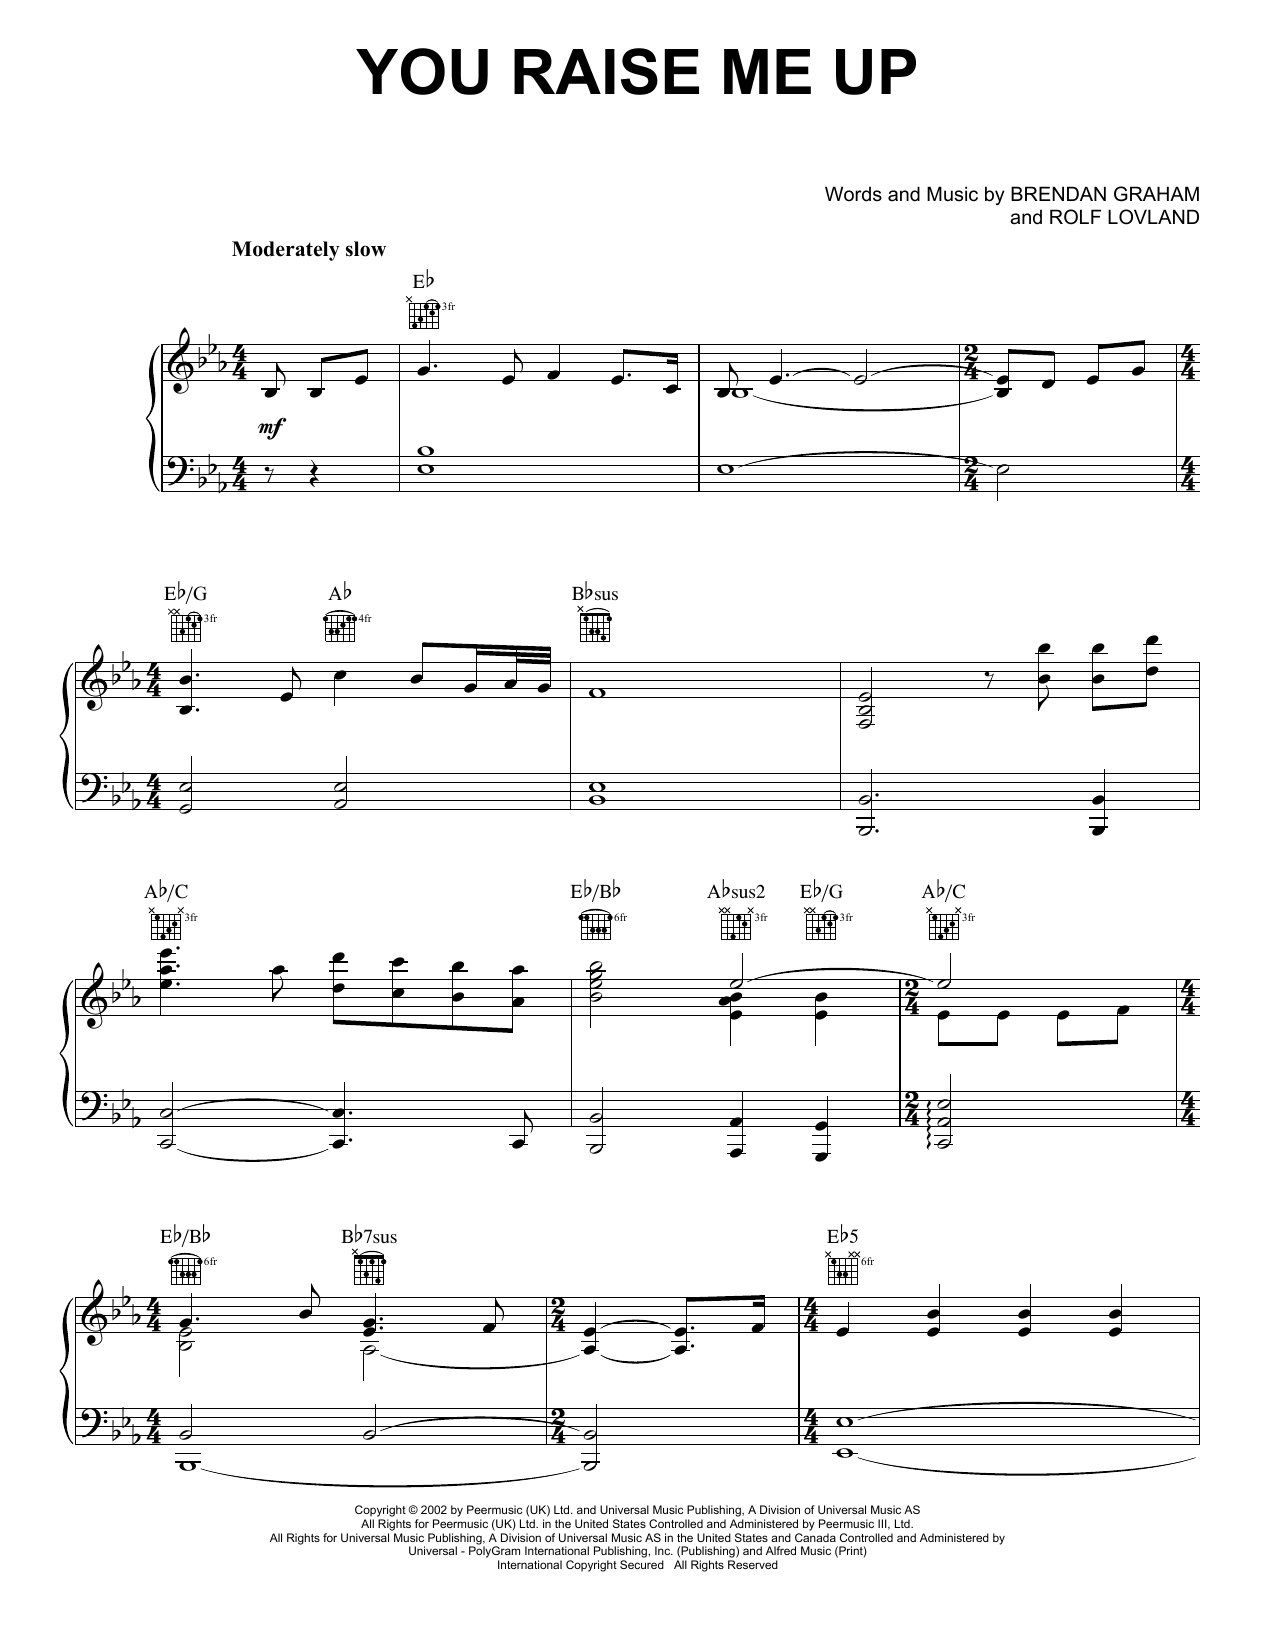 Josh Groban You Raise Me Up Sheet Music Notes & Chords for Accordion - Download or Print PDF